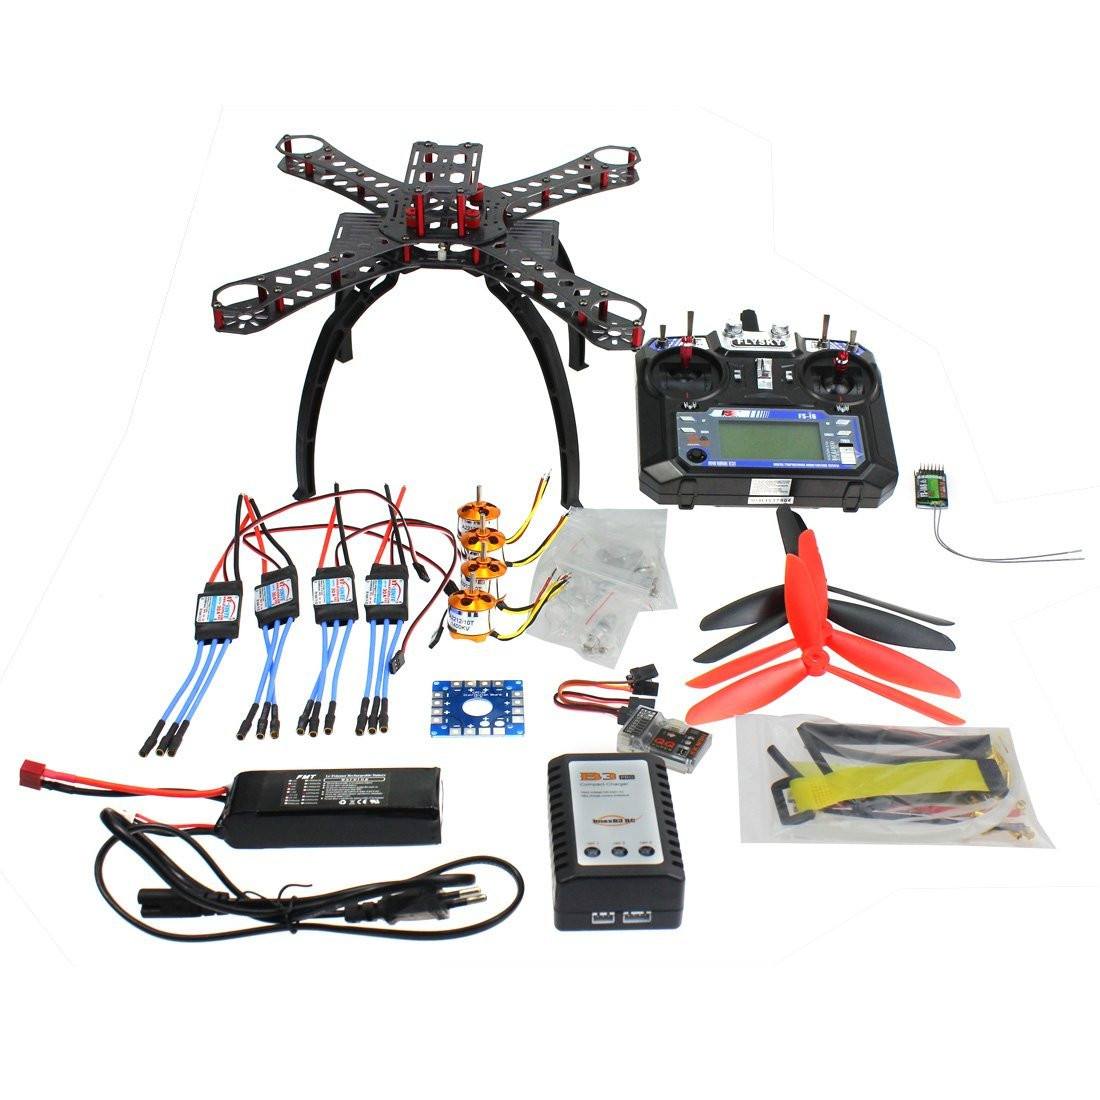 Best DIY Drone Kit
 The Best Educational DIY Drone Kits in 2017